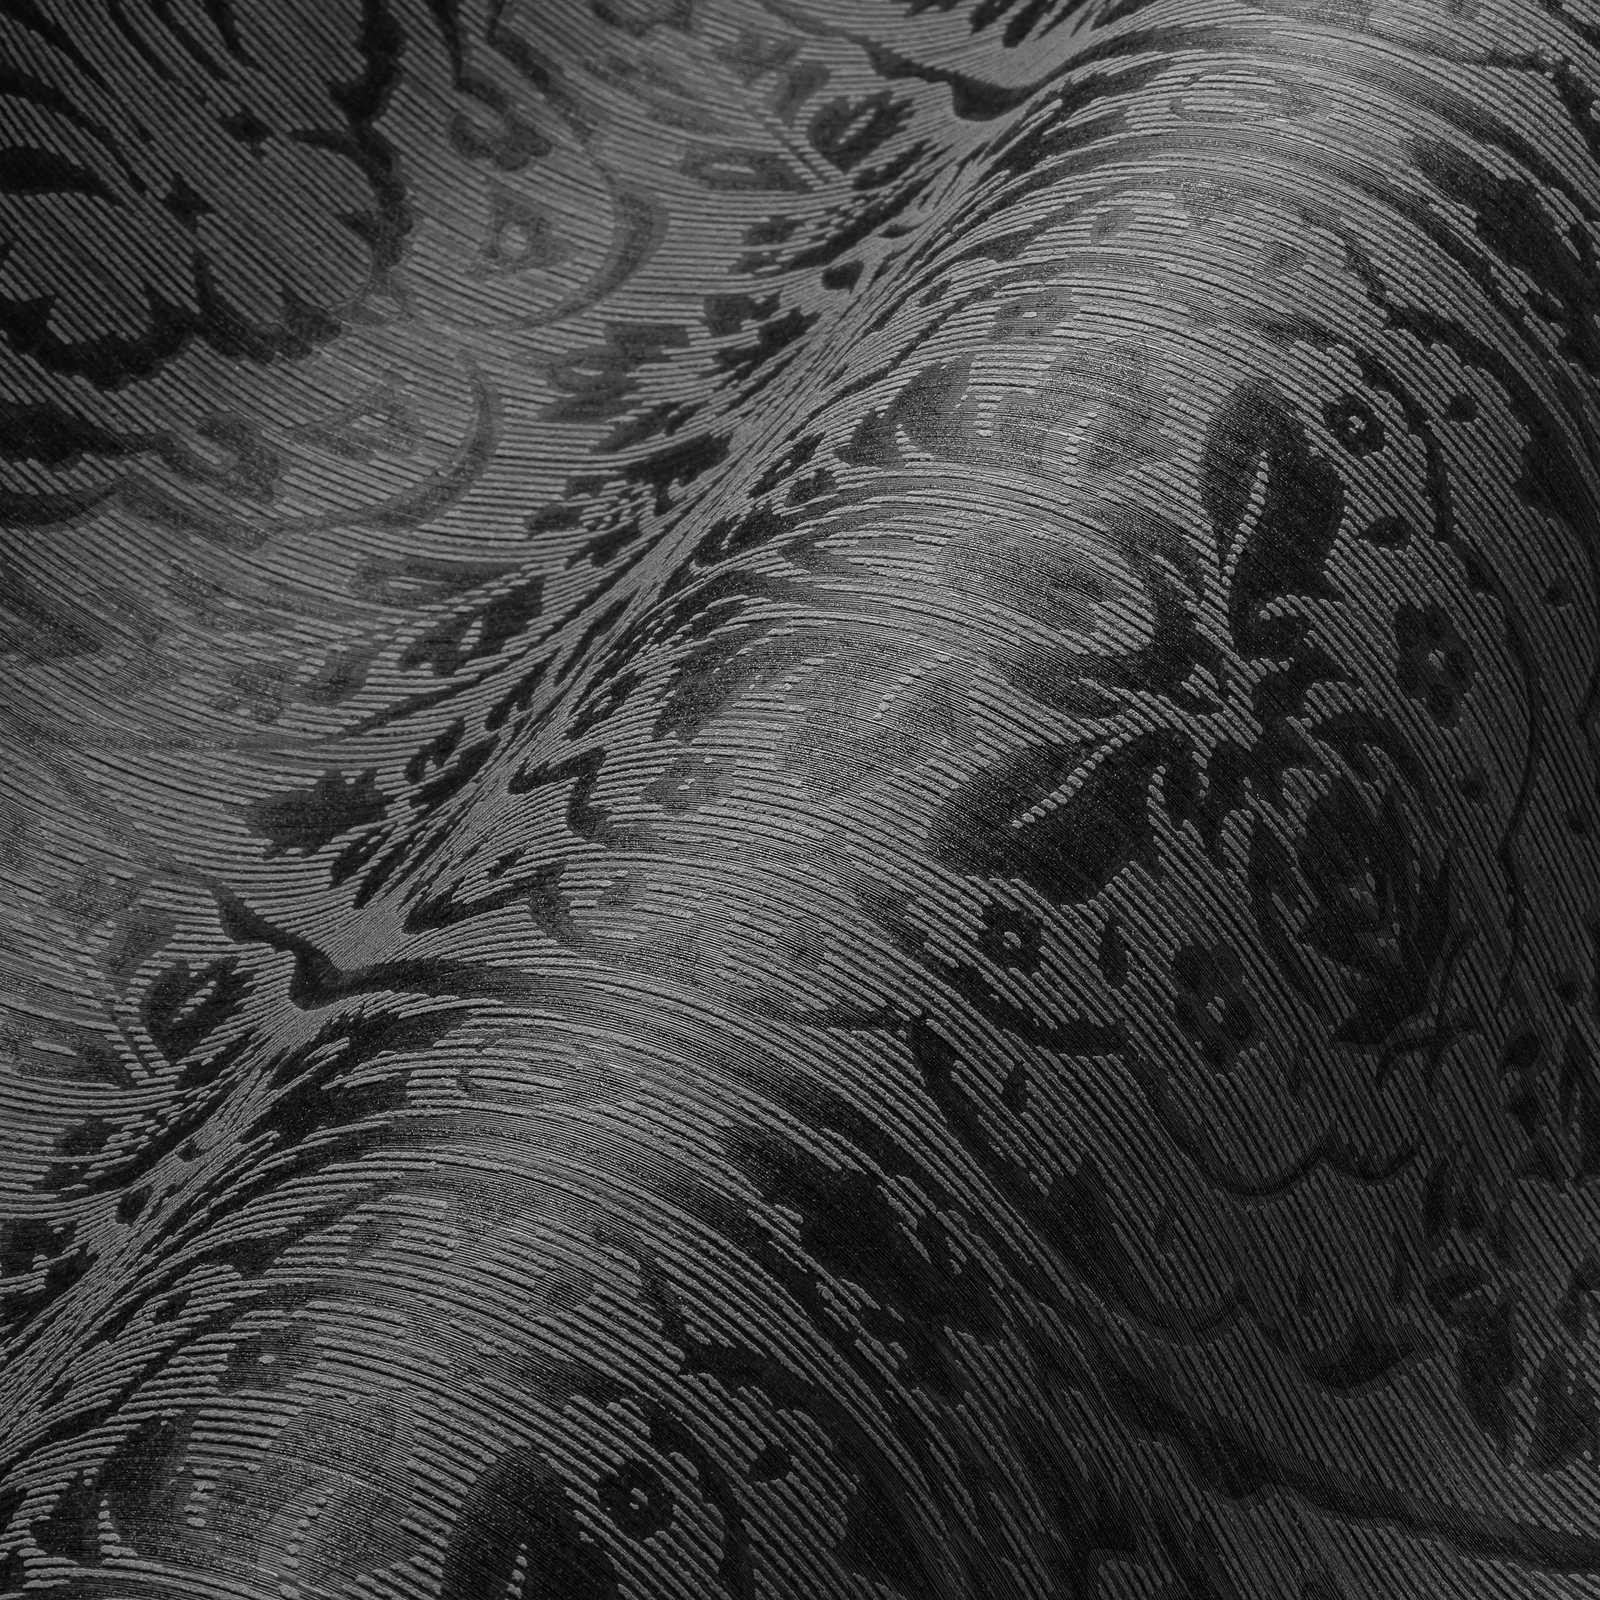             Non-woven wallpaper with ornamental pattern & structure design - brown, black
        